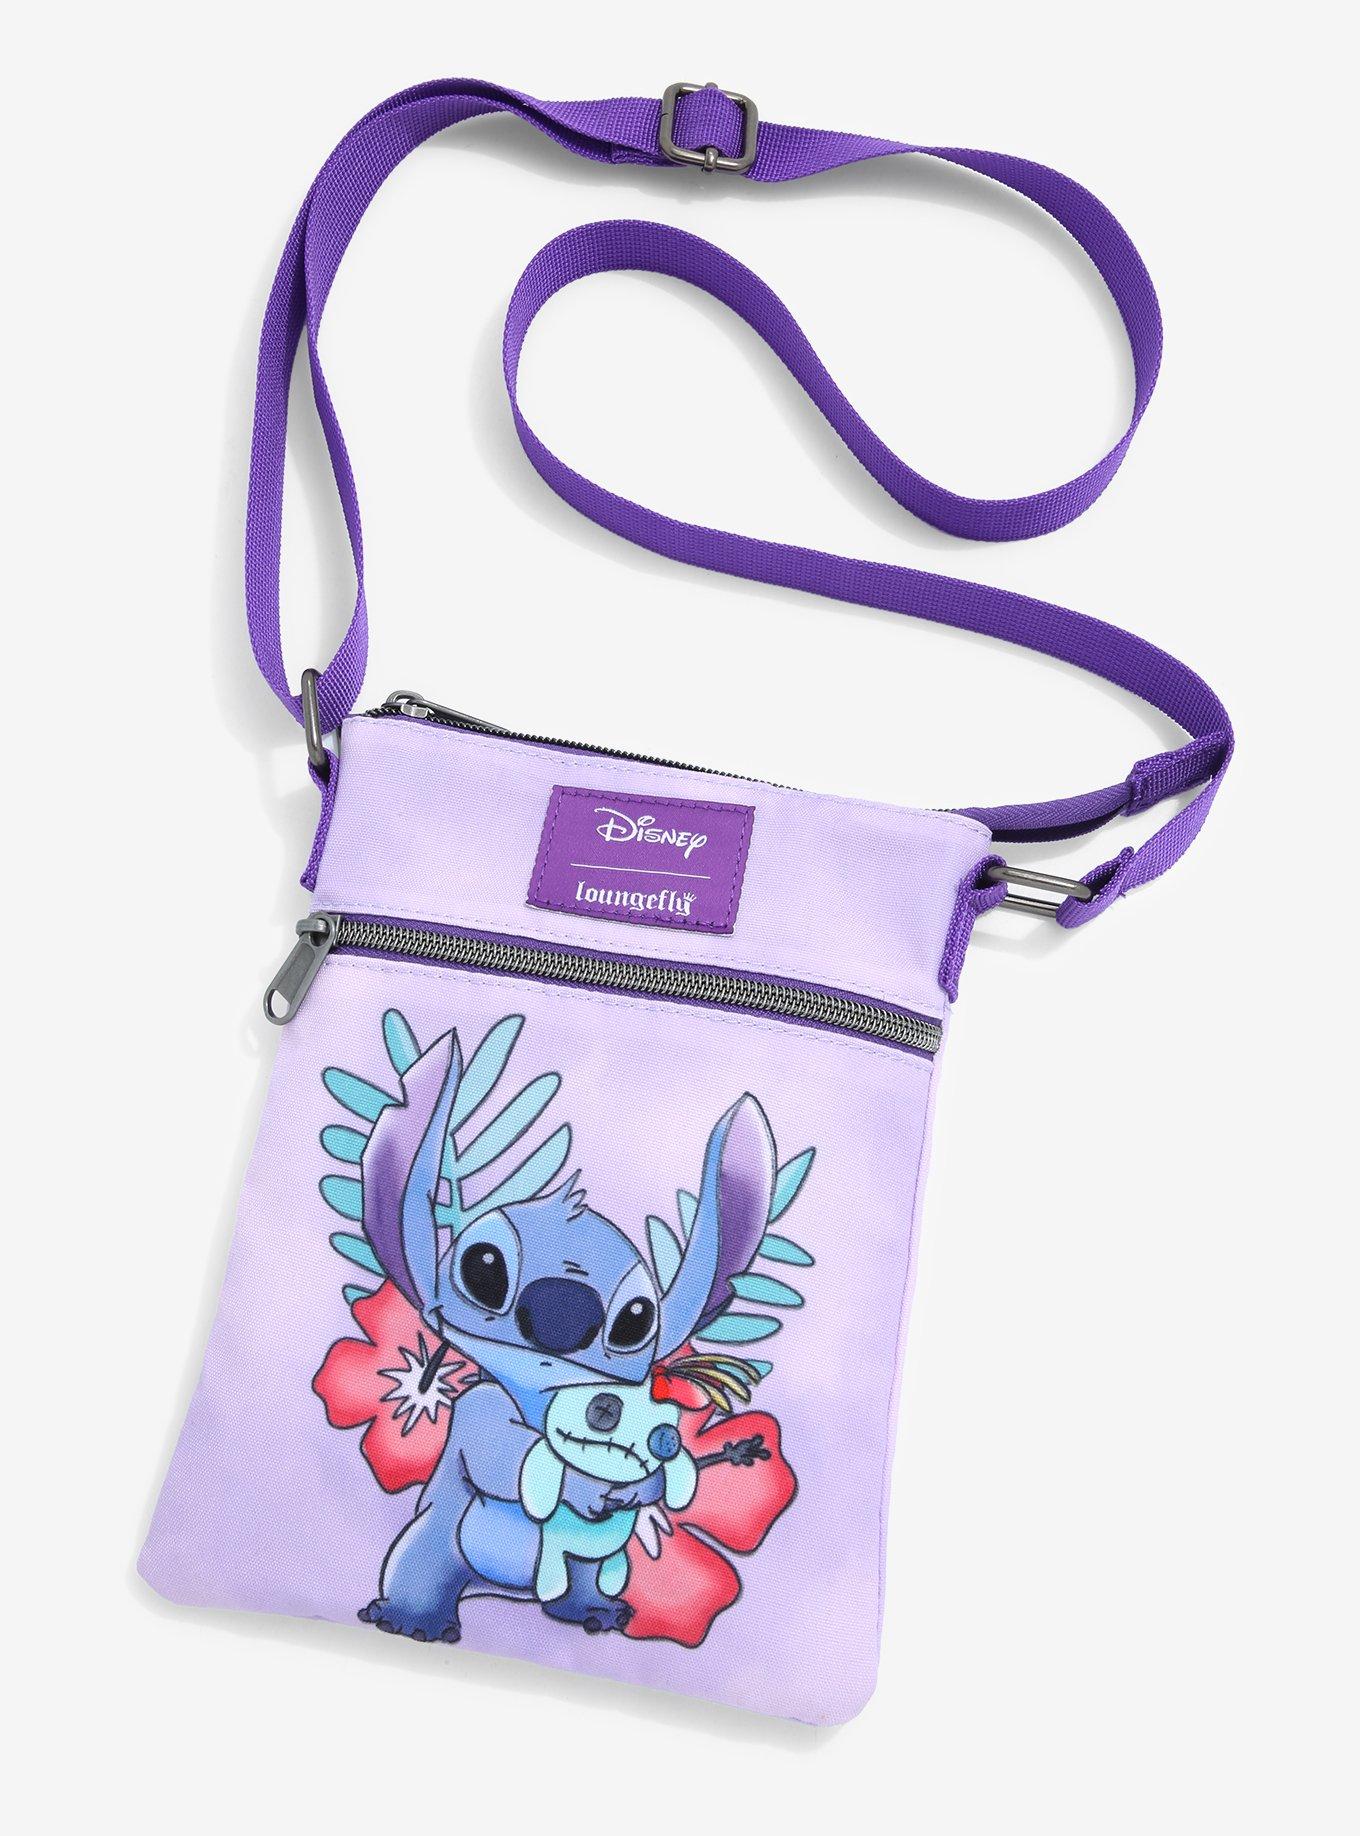 Disney Crossbody Bag - Stitch With Guitar